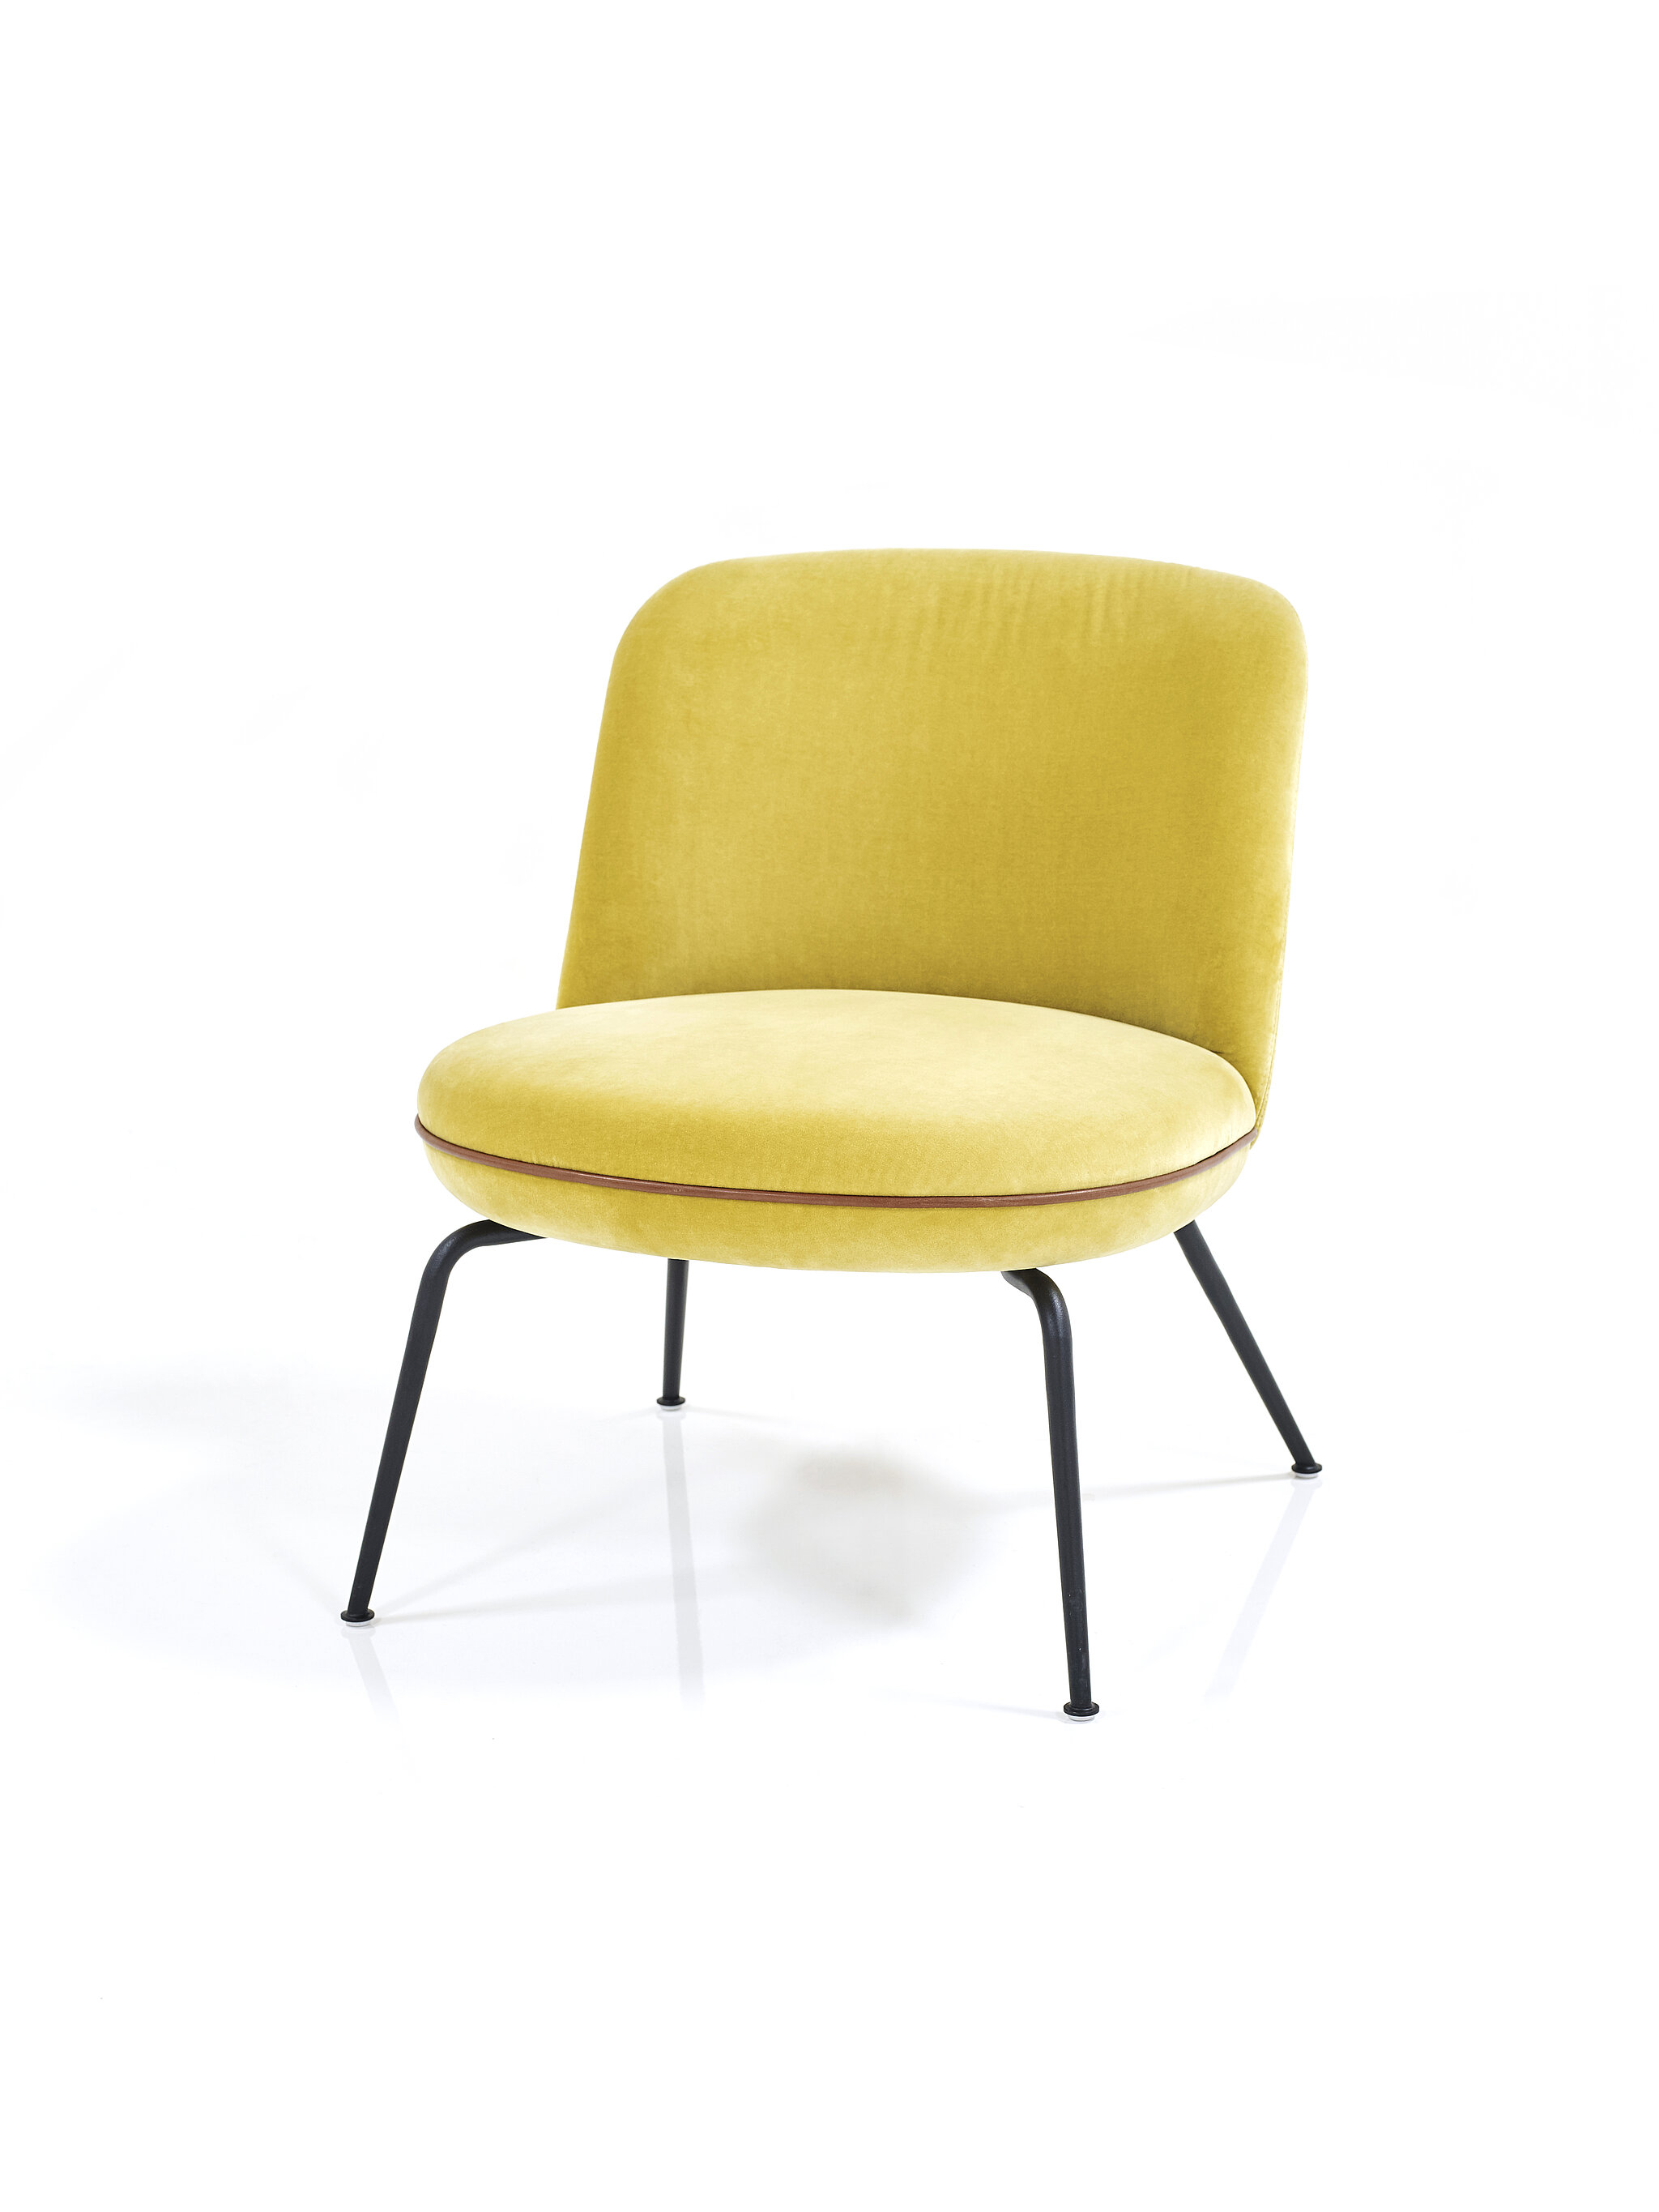 Merwyn Lounge Chair in velvet gold 